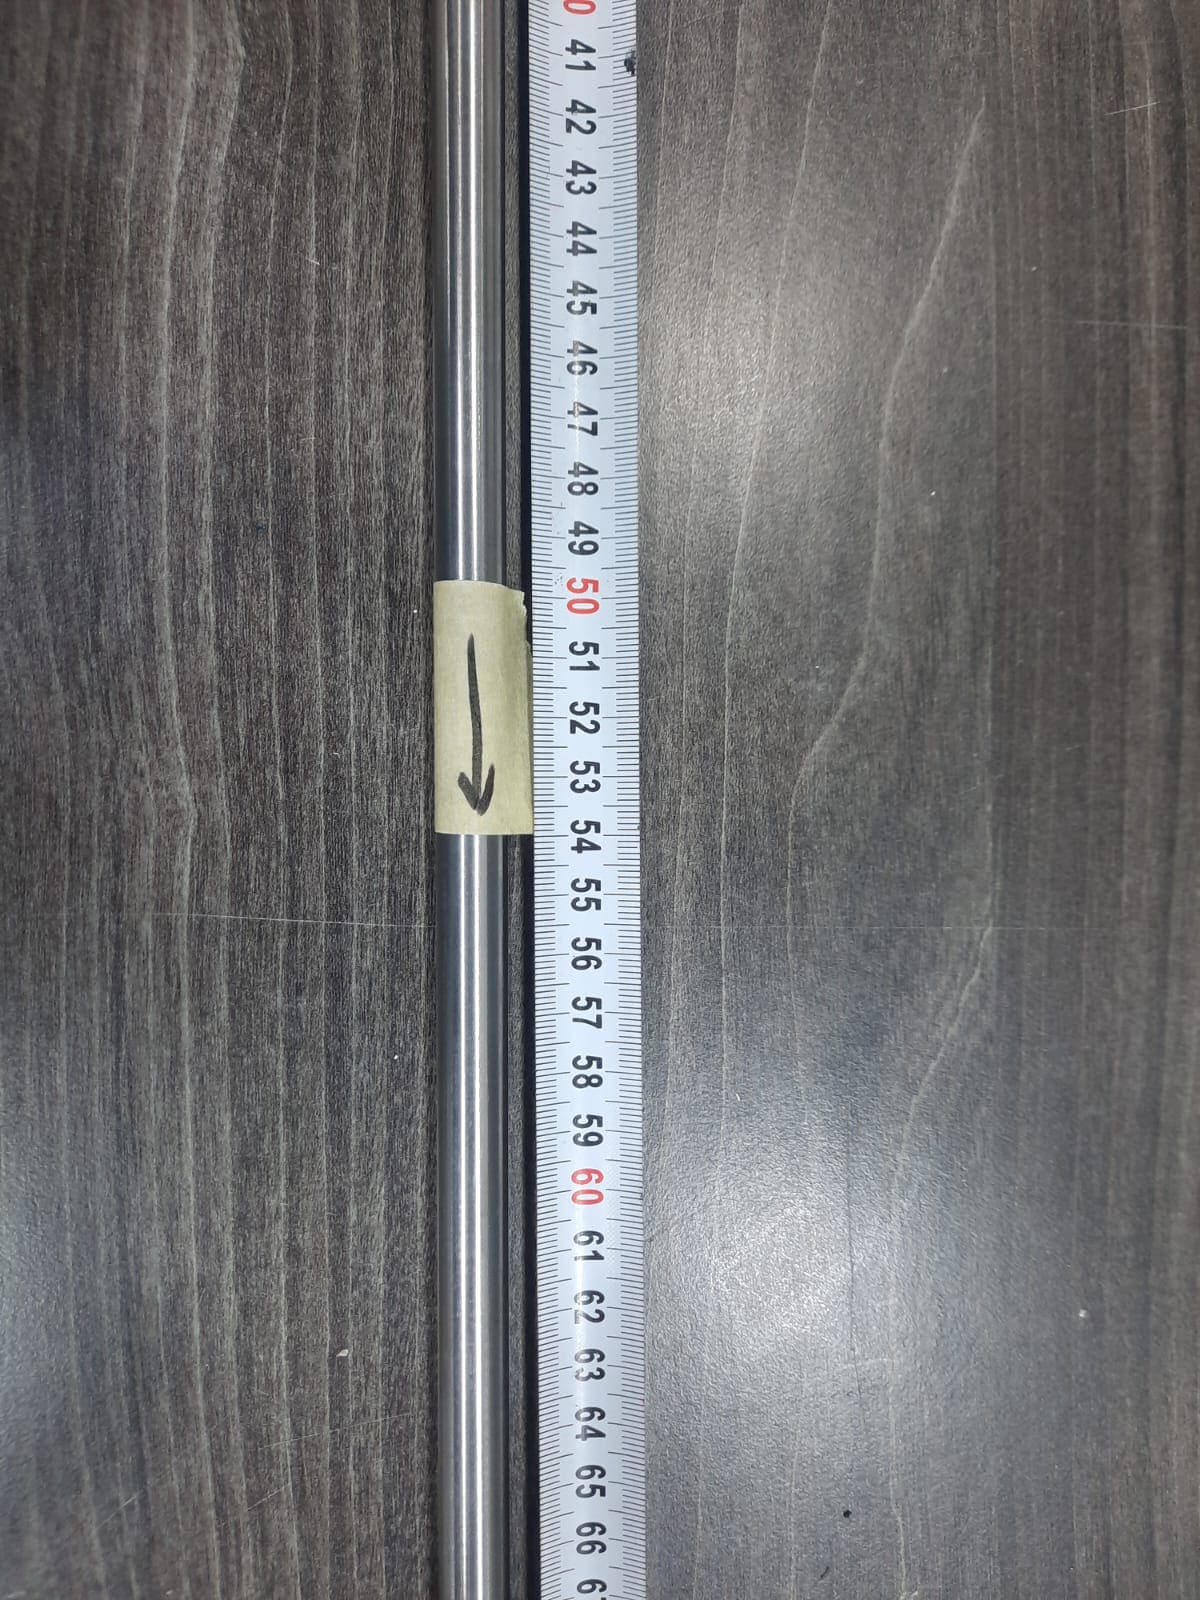 rod.measuring